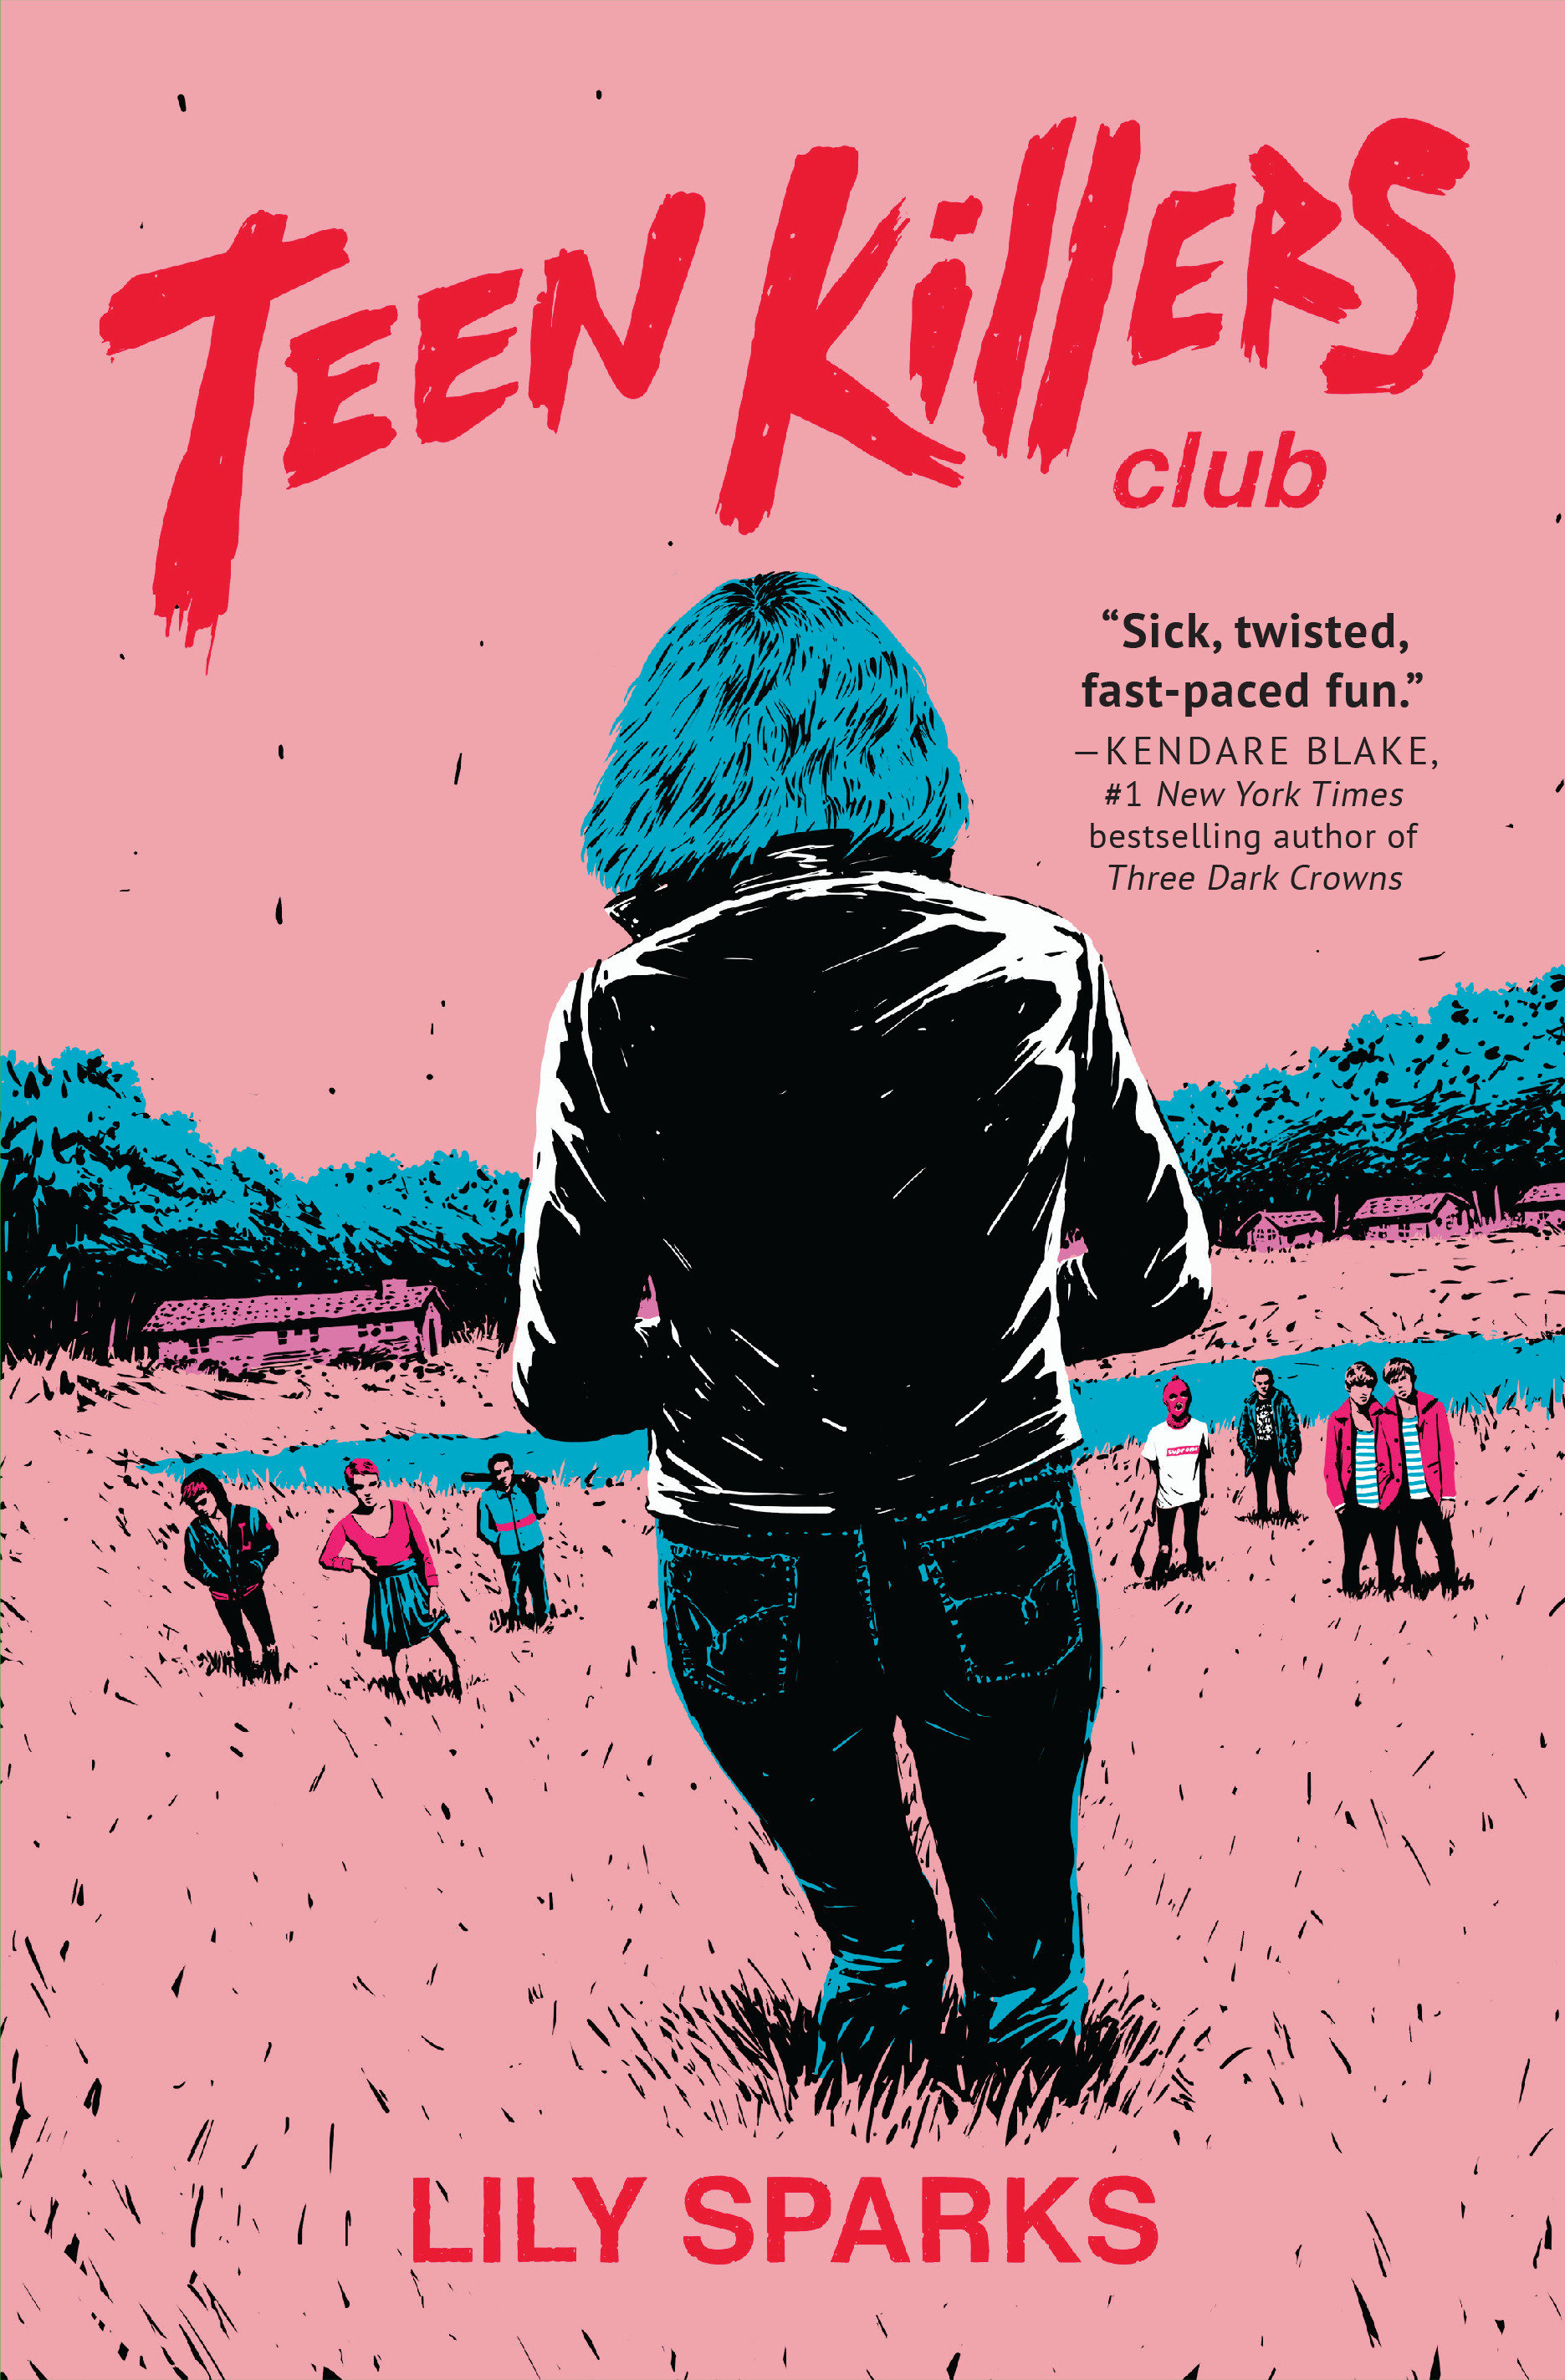 Teen Killers Club cover image